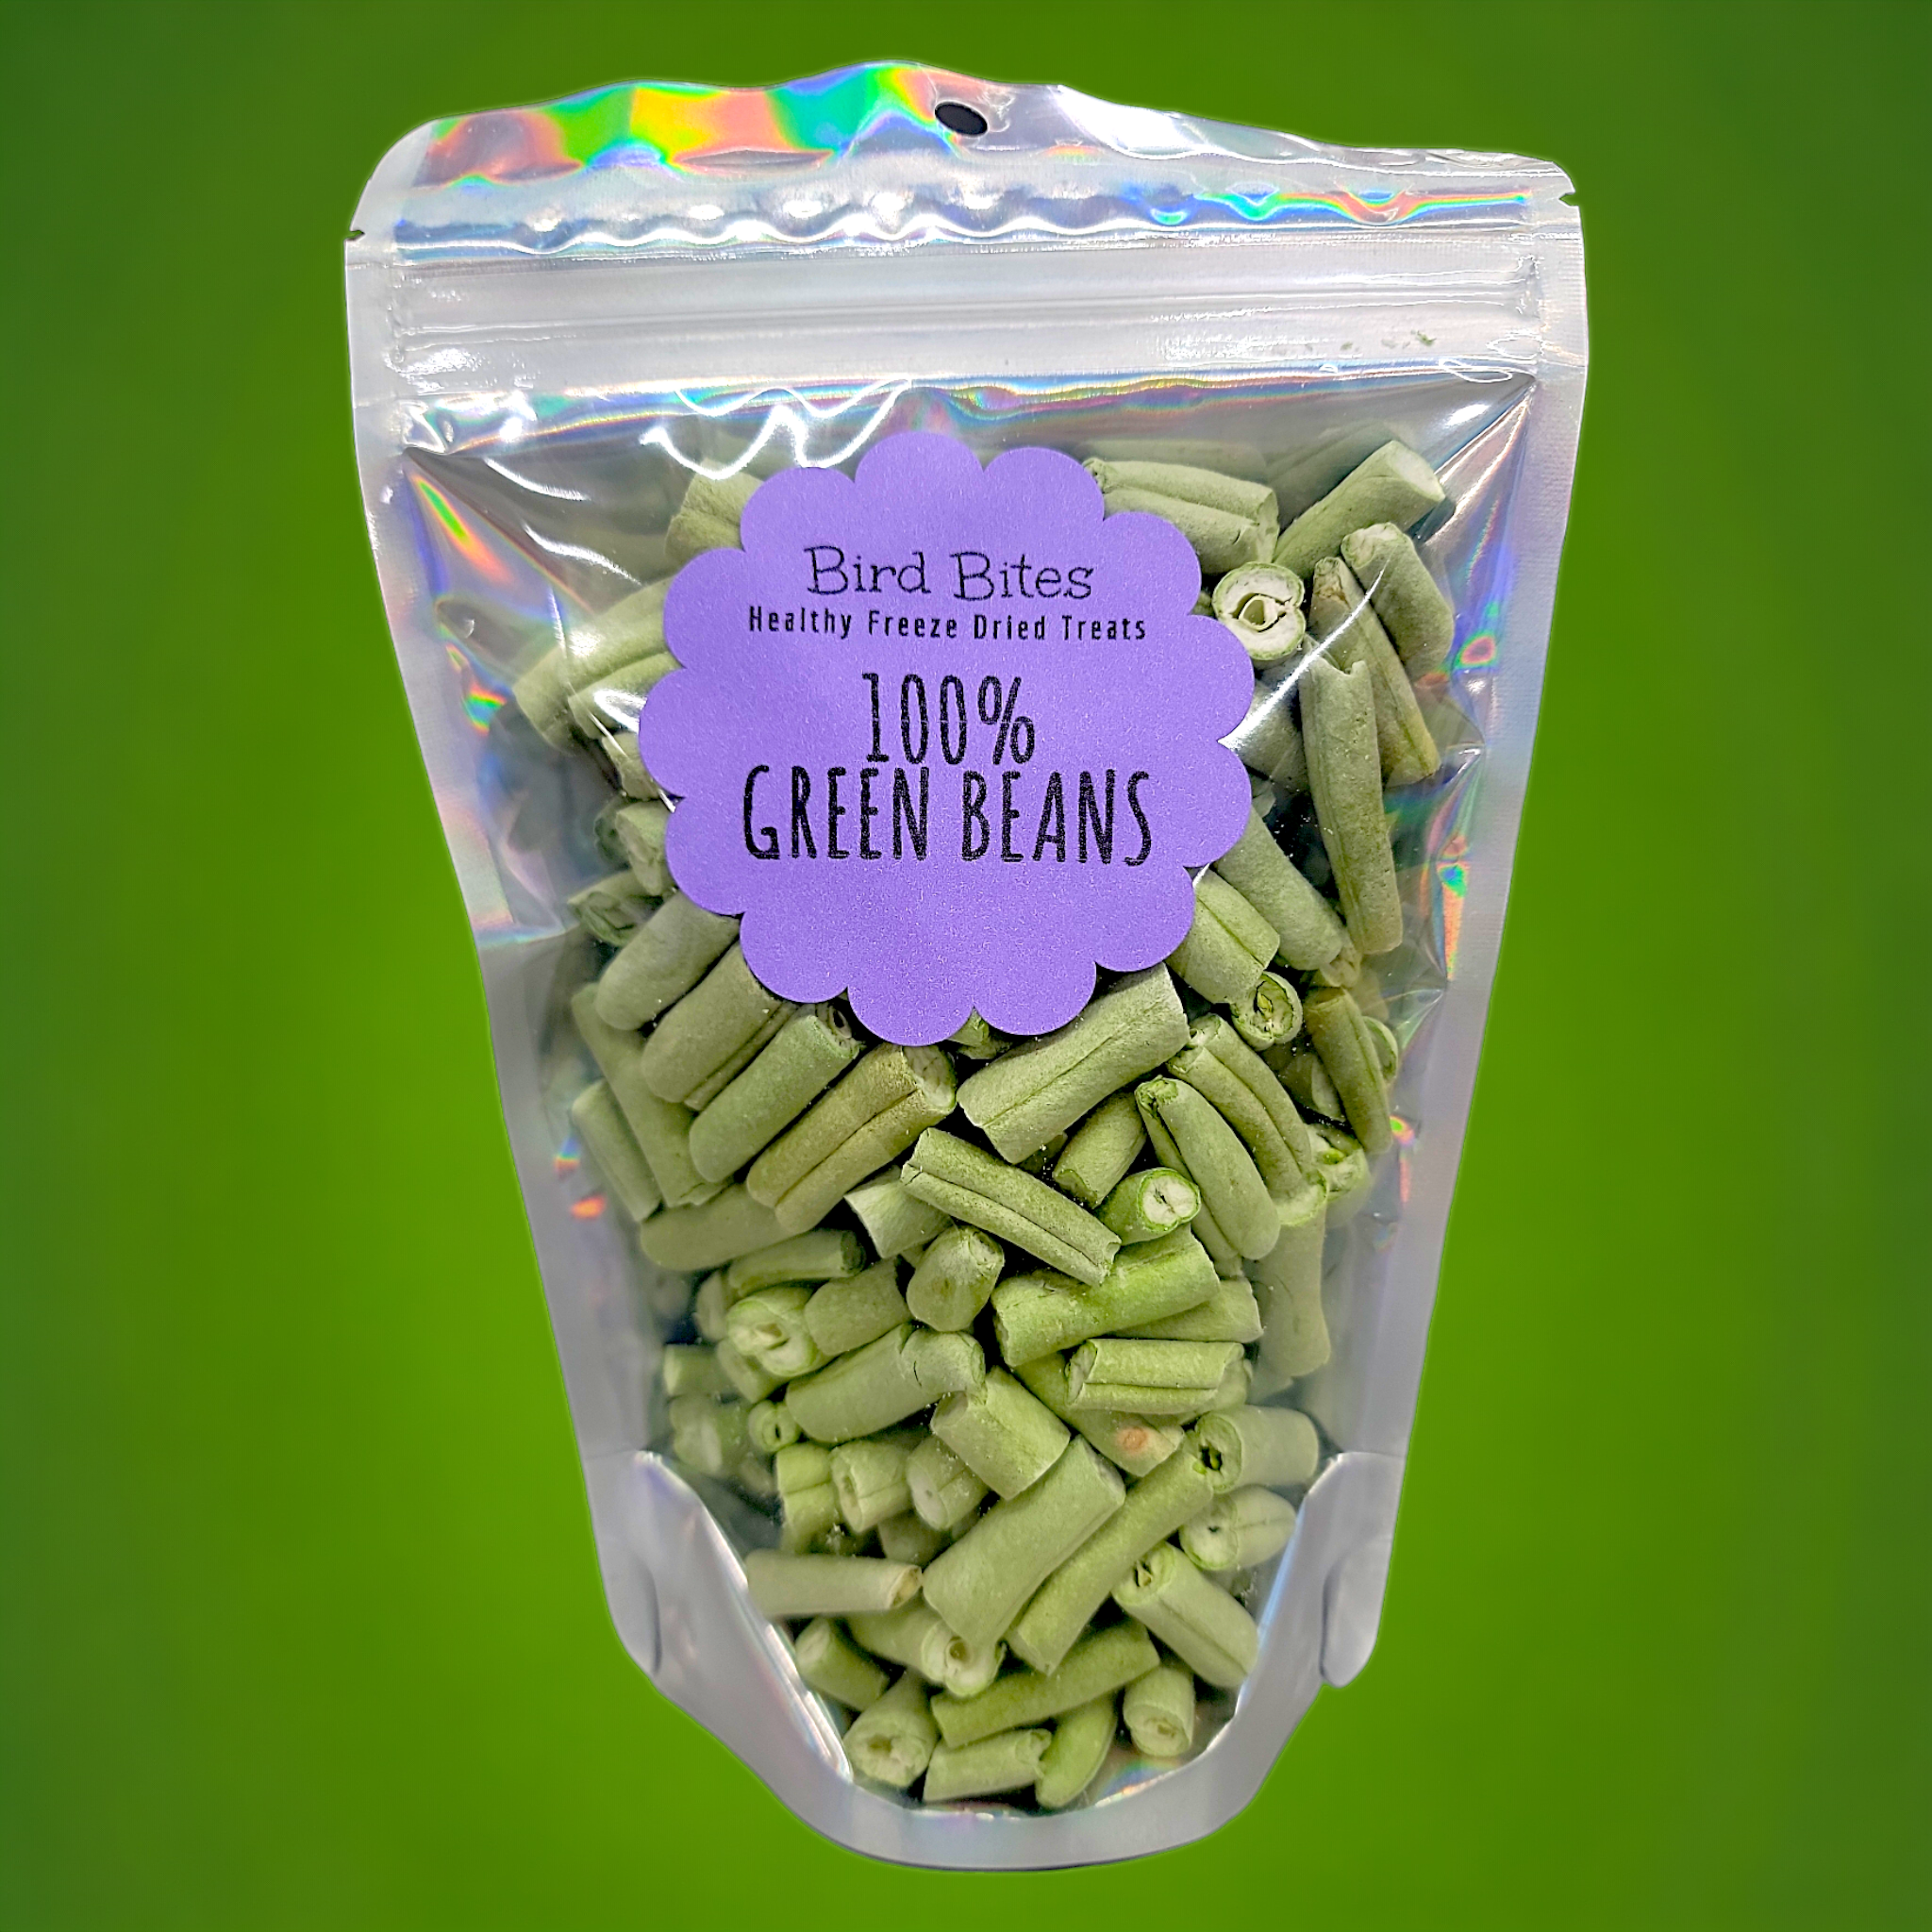 100% Green Beans - 1.5 Cups - Bird Bites Healthy Freeze Dried Treats